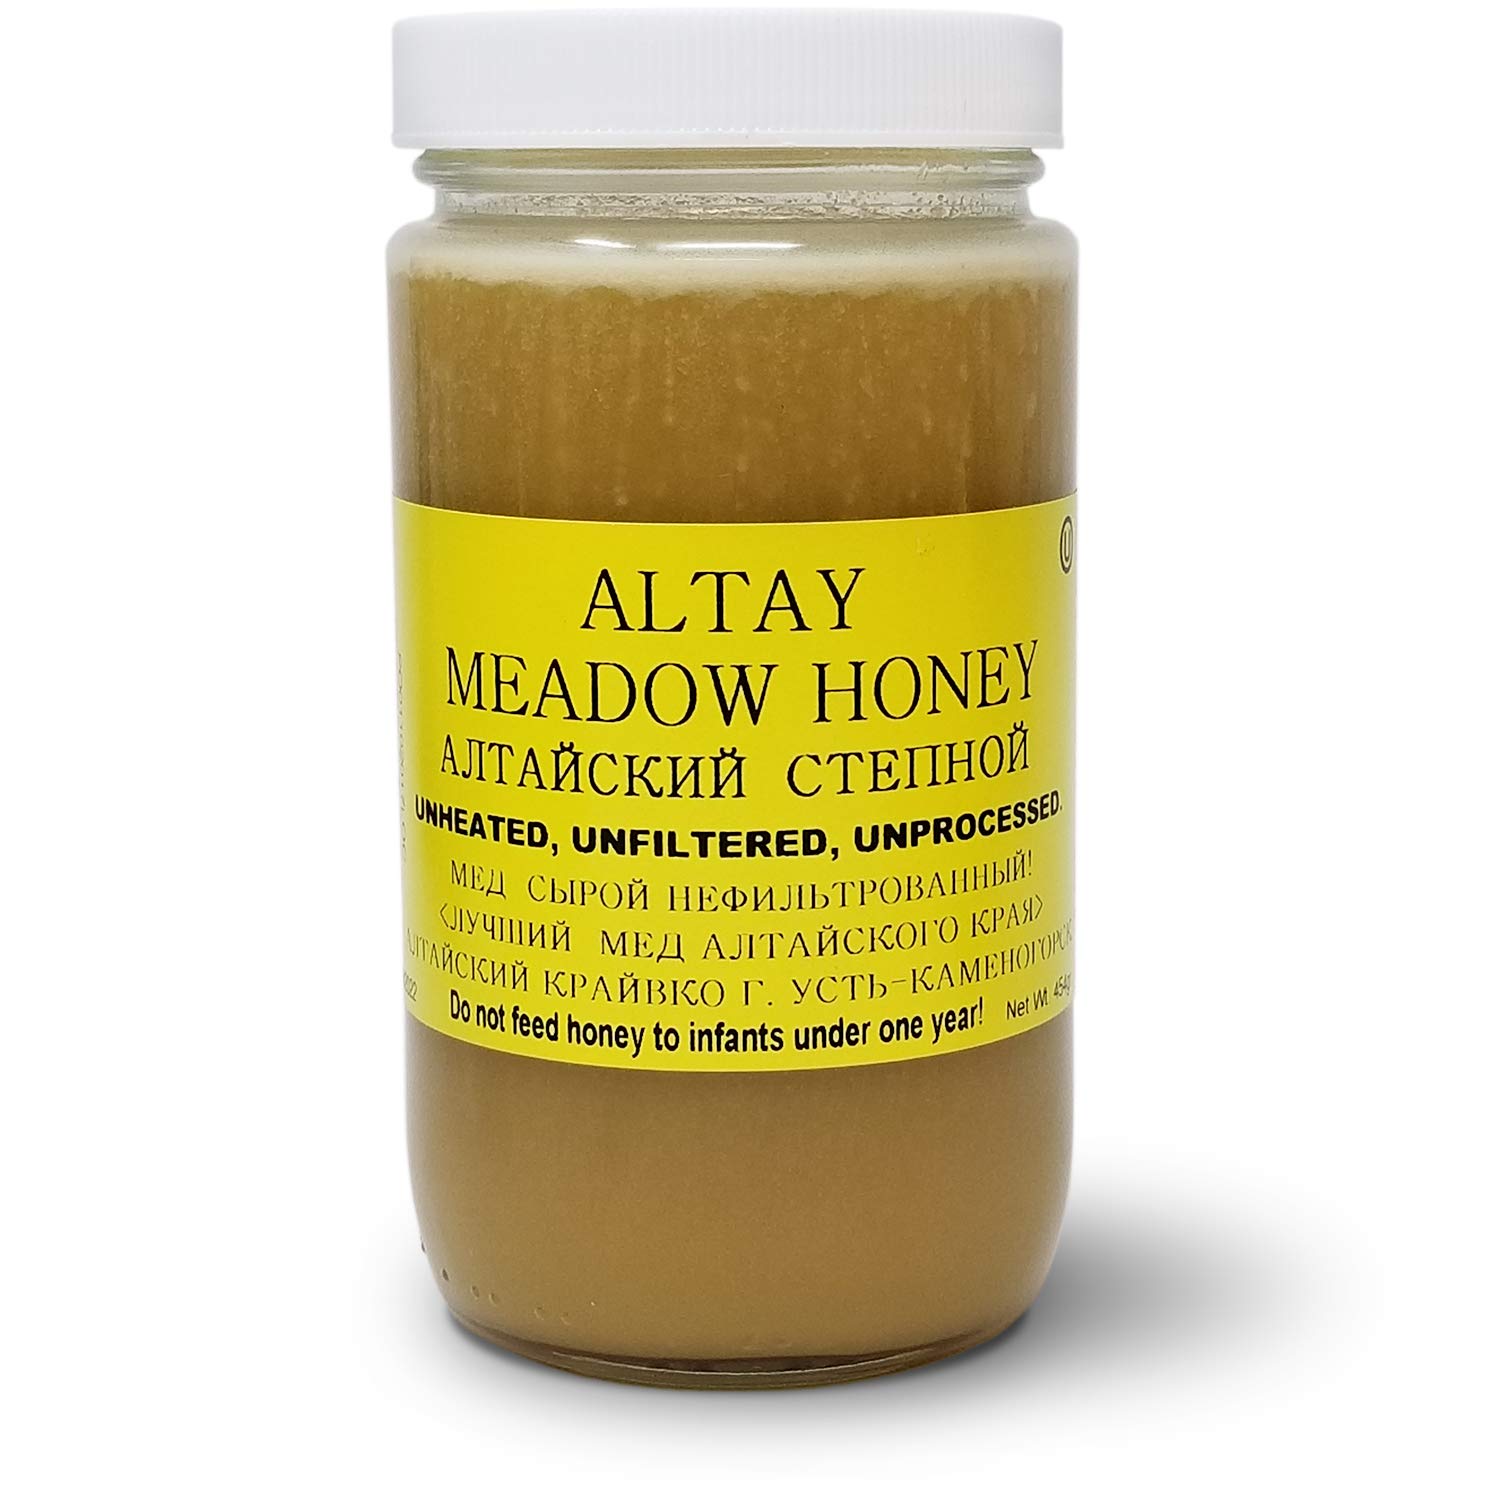 Types Of Honey